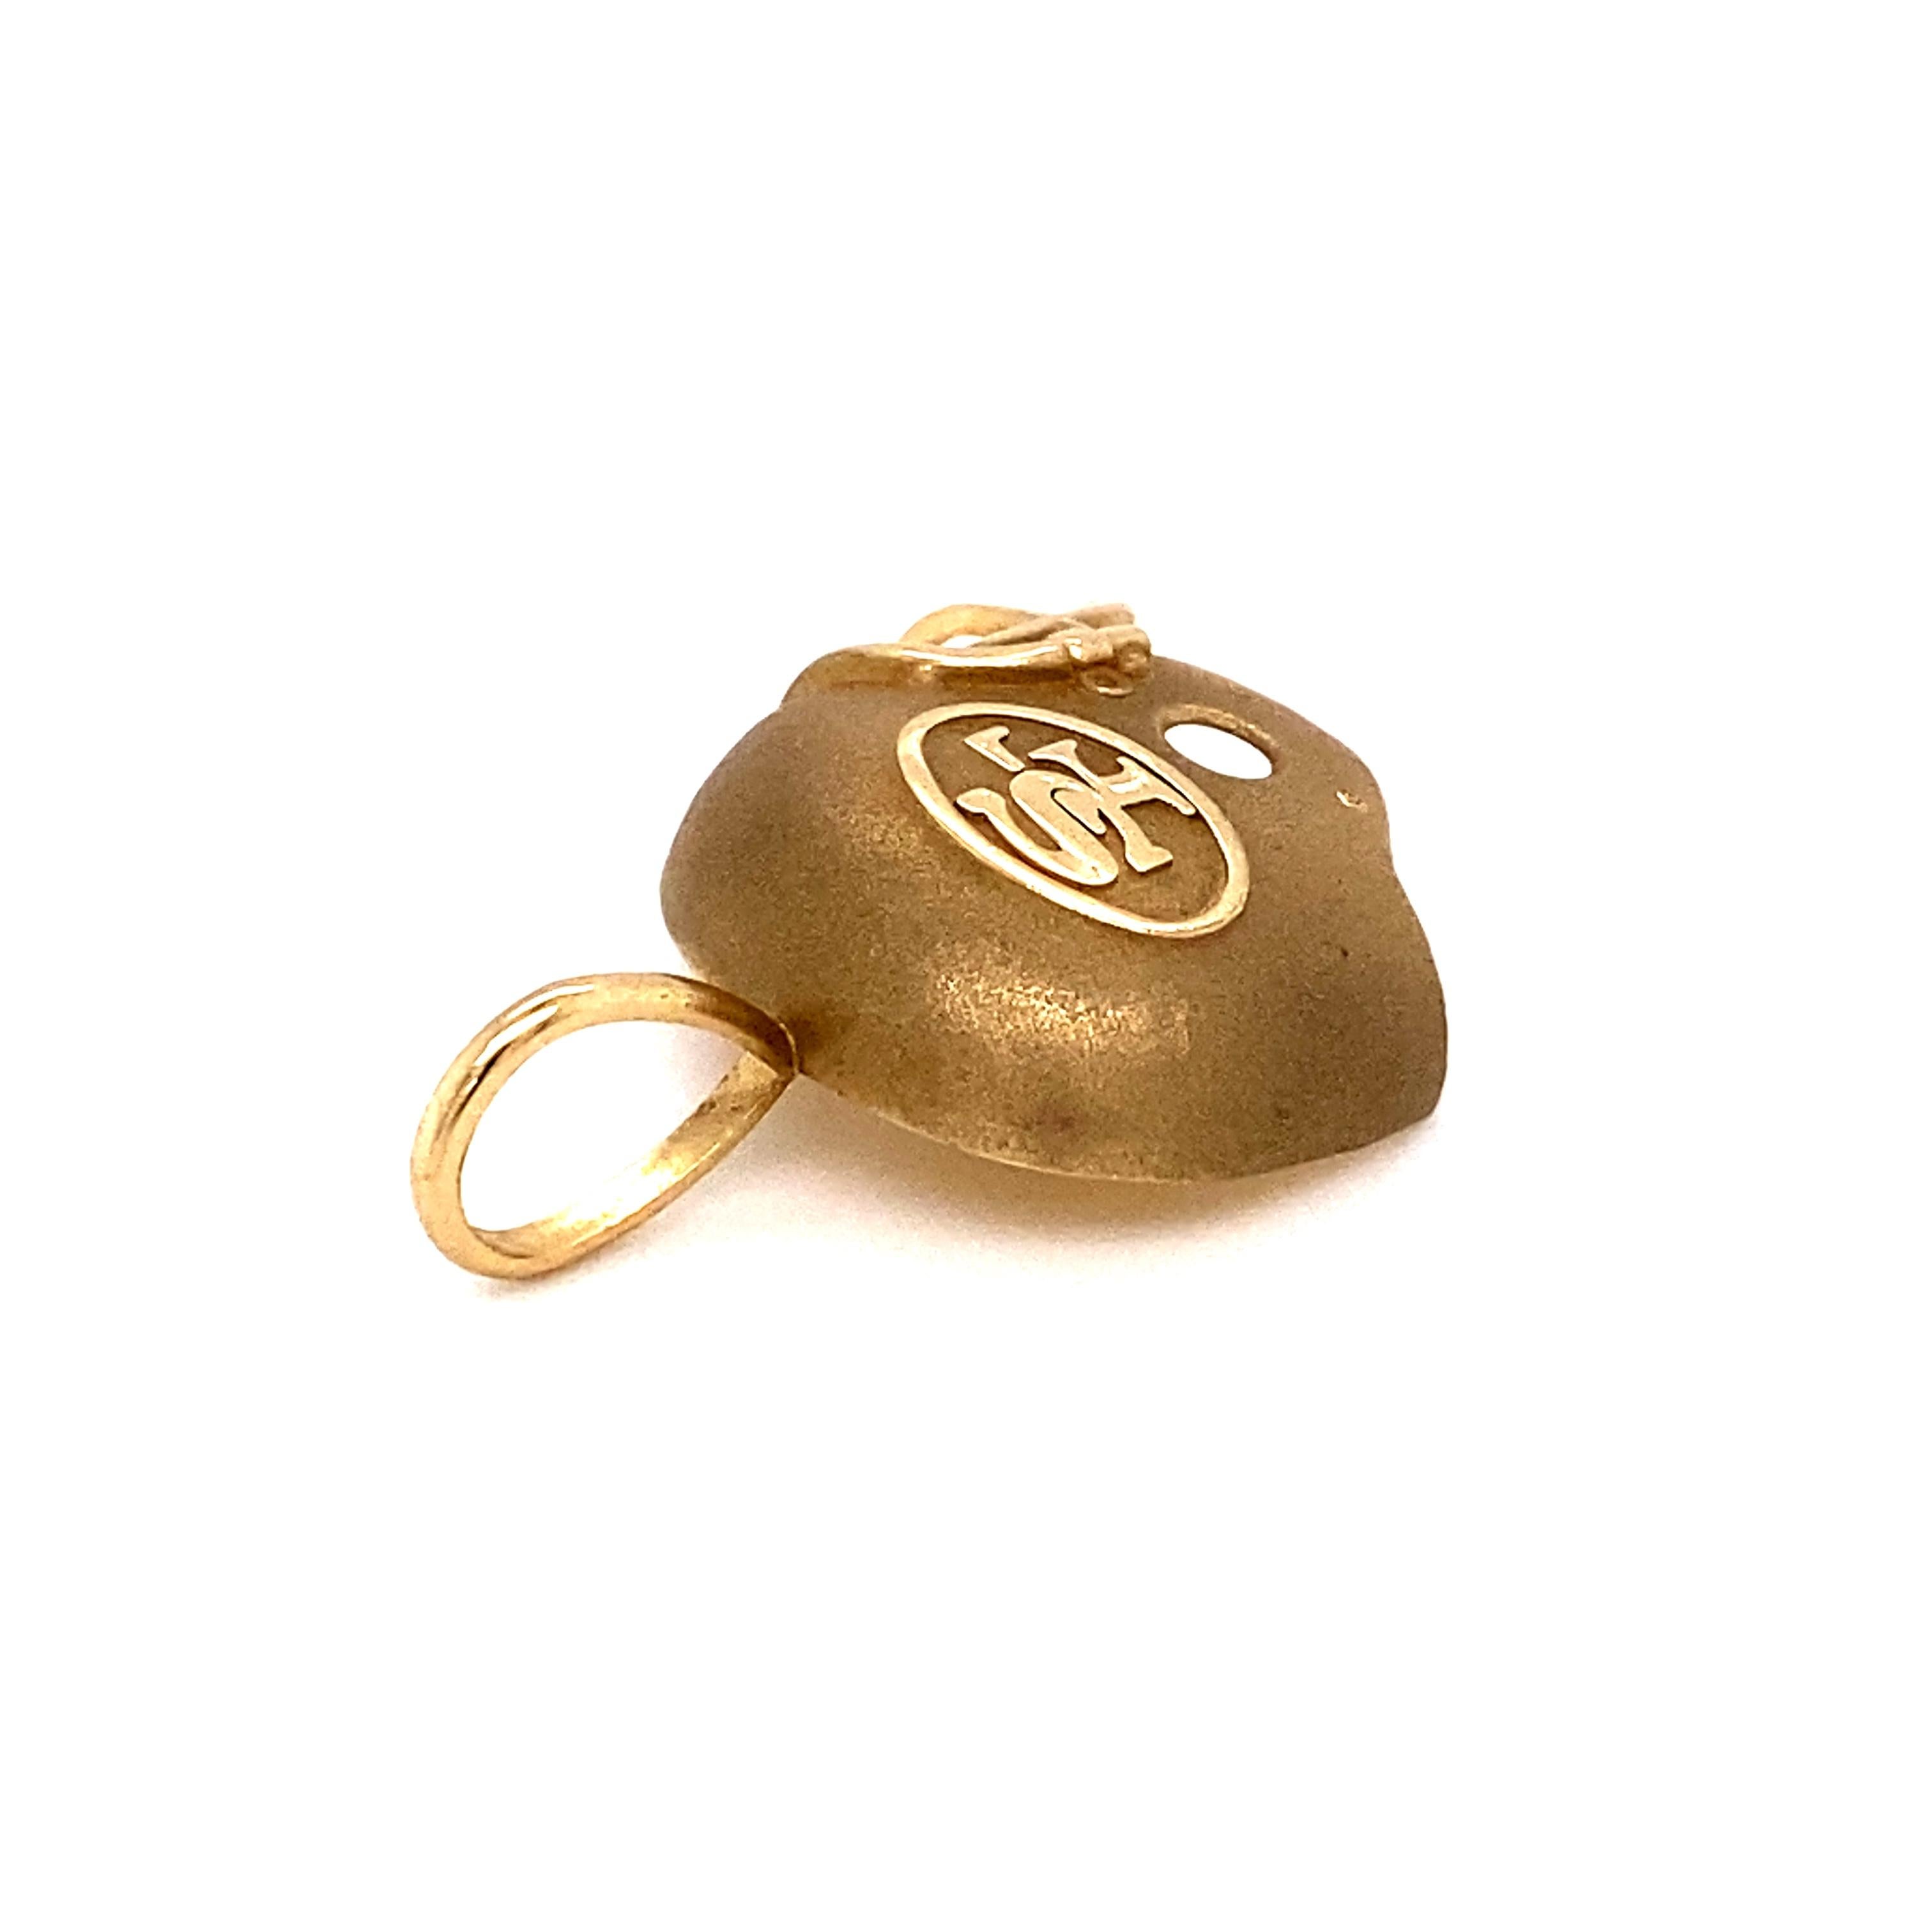 49ers gold helmet pendant